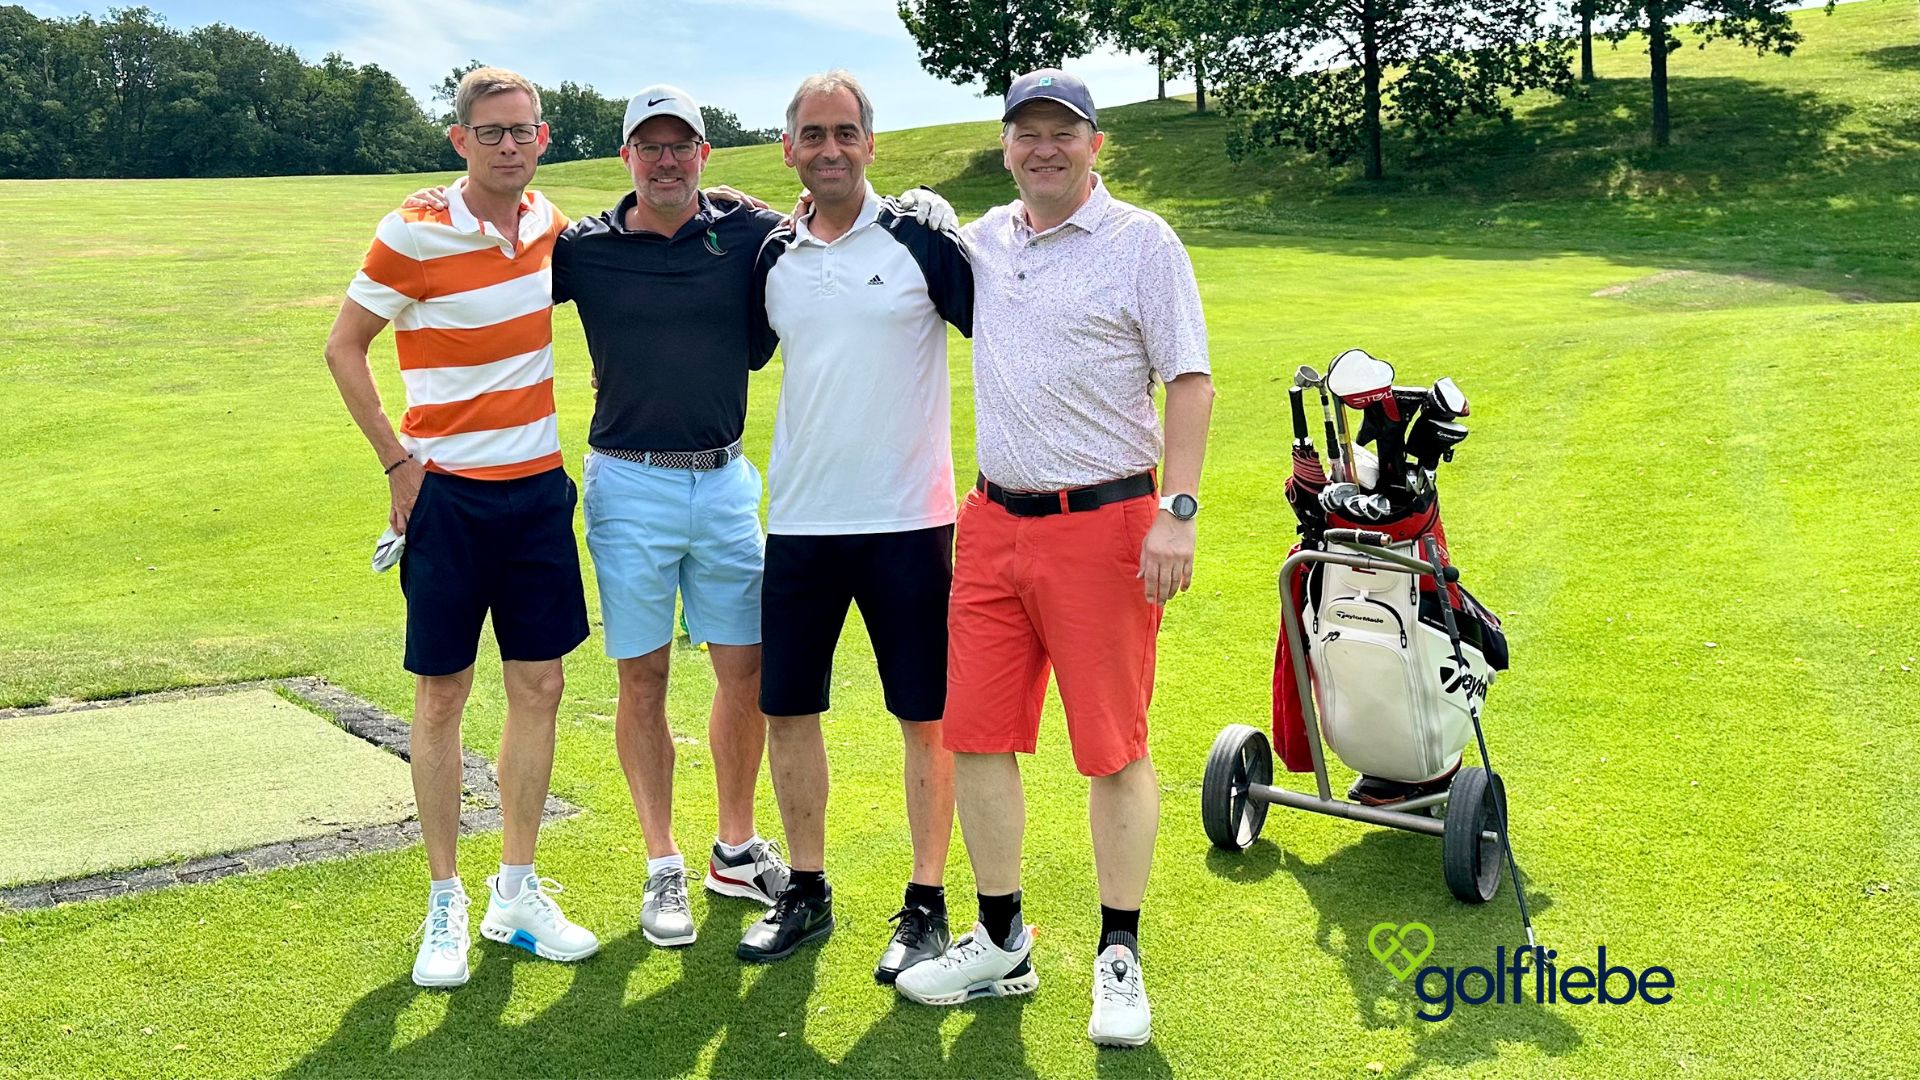 Urs, Matthias, Stefan, Michael Zu Besuch im GC Hardenberg, Golfresort Hardenberg Golfliebe.com